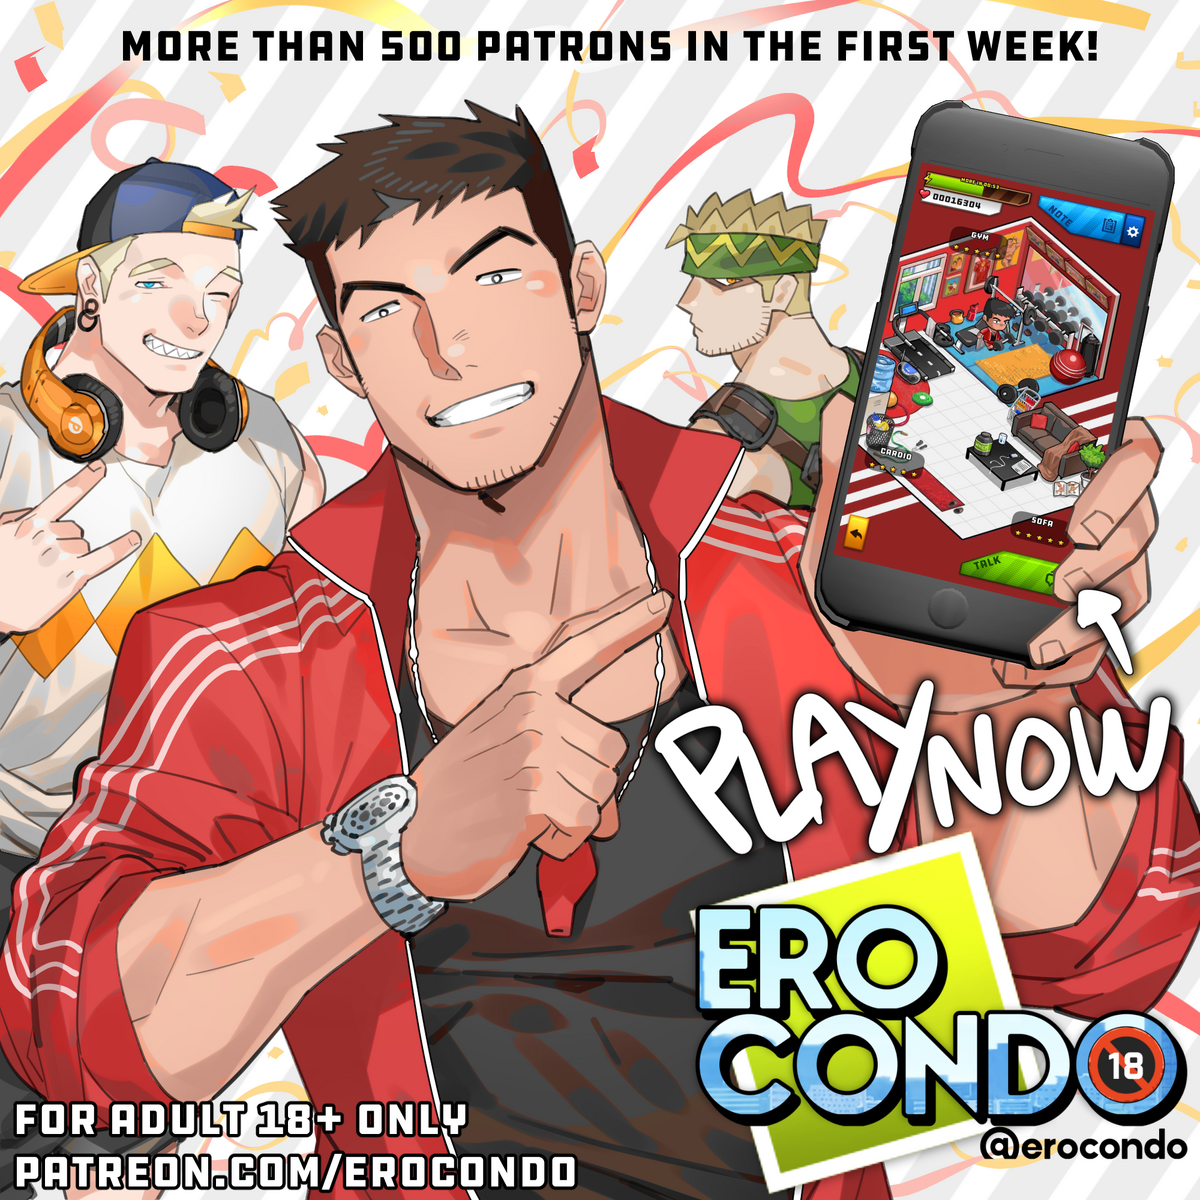 [New May 2021 Update!] Ero Condo - Bara mobile game